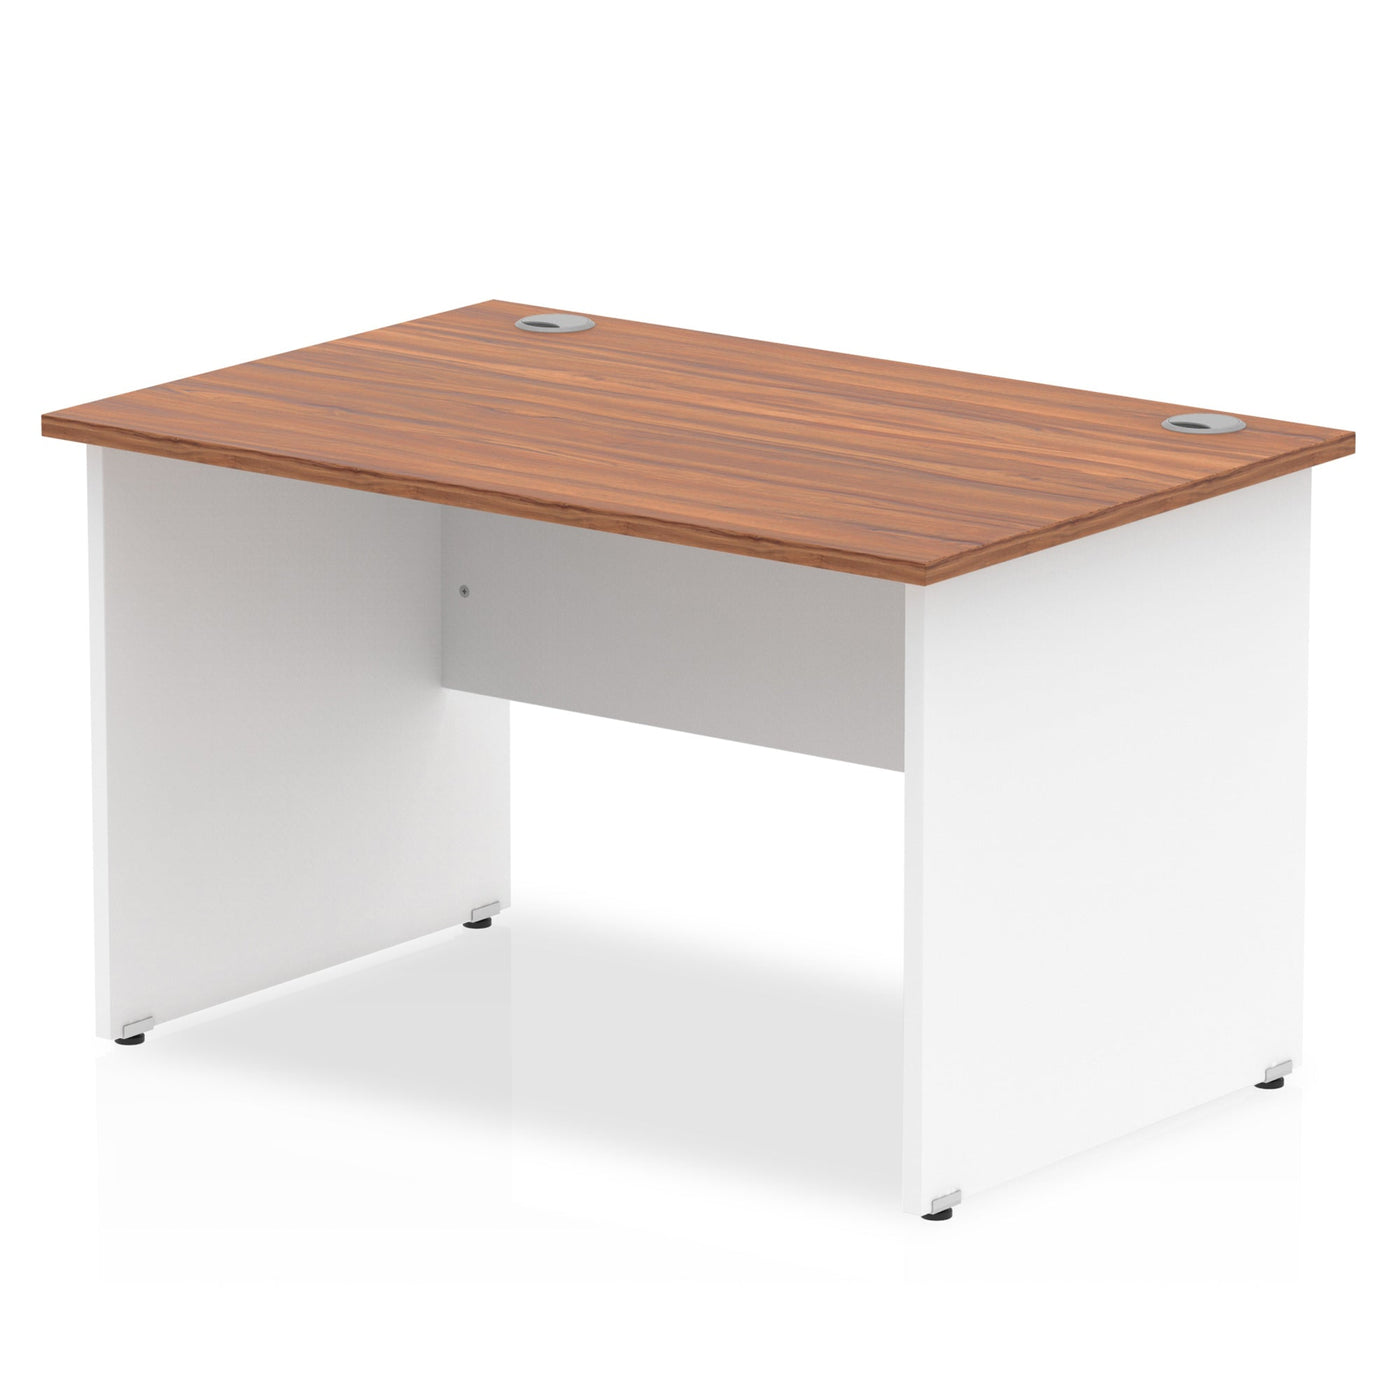 Impulse 1200mm Home Office Desk | Panel End Desk | Home Office Furniture | Homework Desk | Work From Home Desk | Wooden Desk